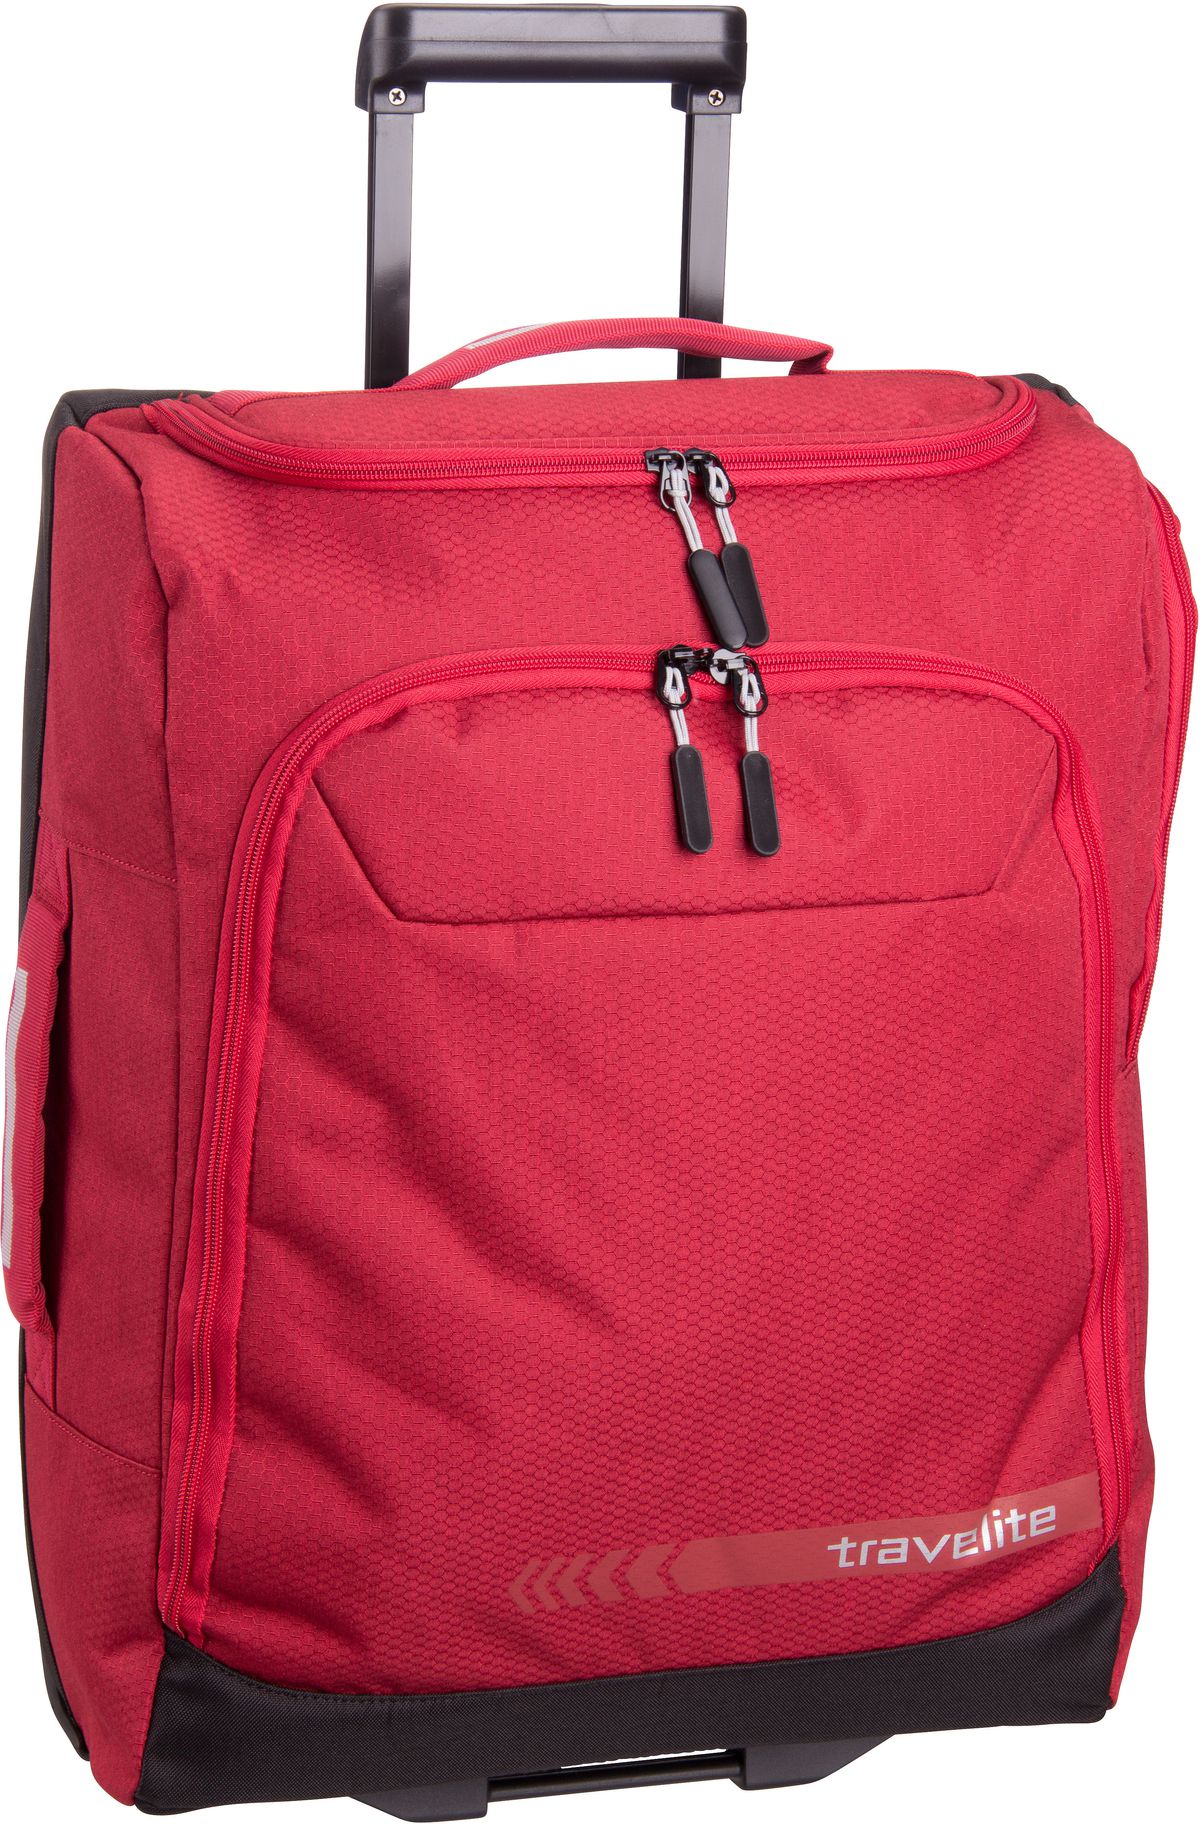 travelite Kick Off Rollenreisetasche S - Rot